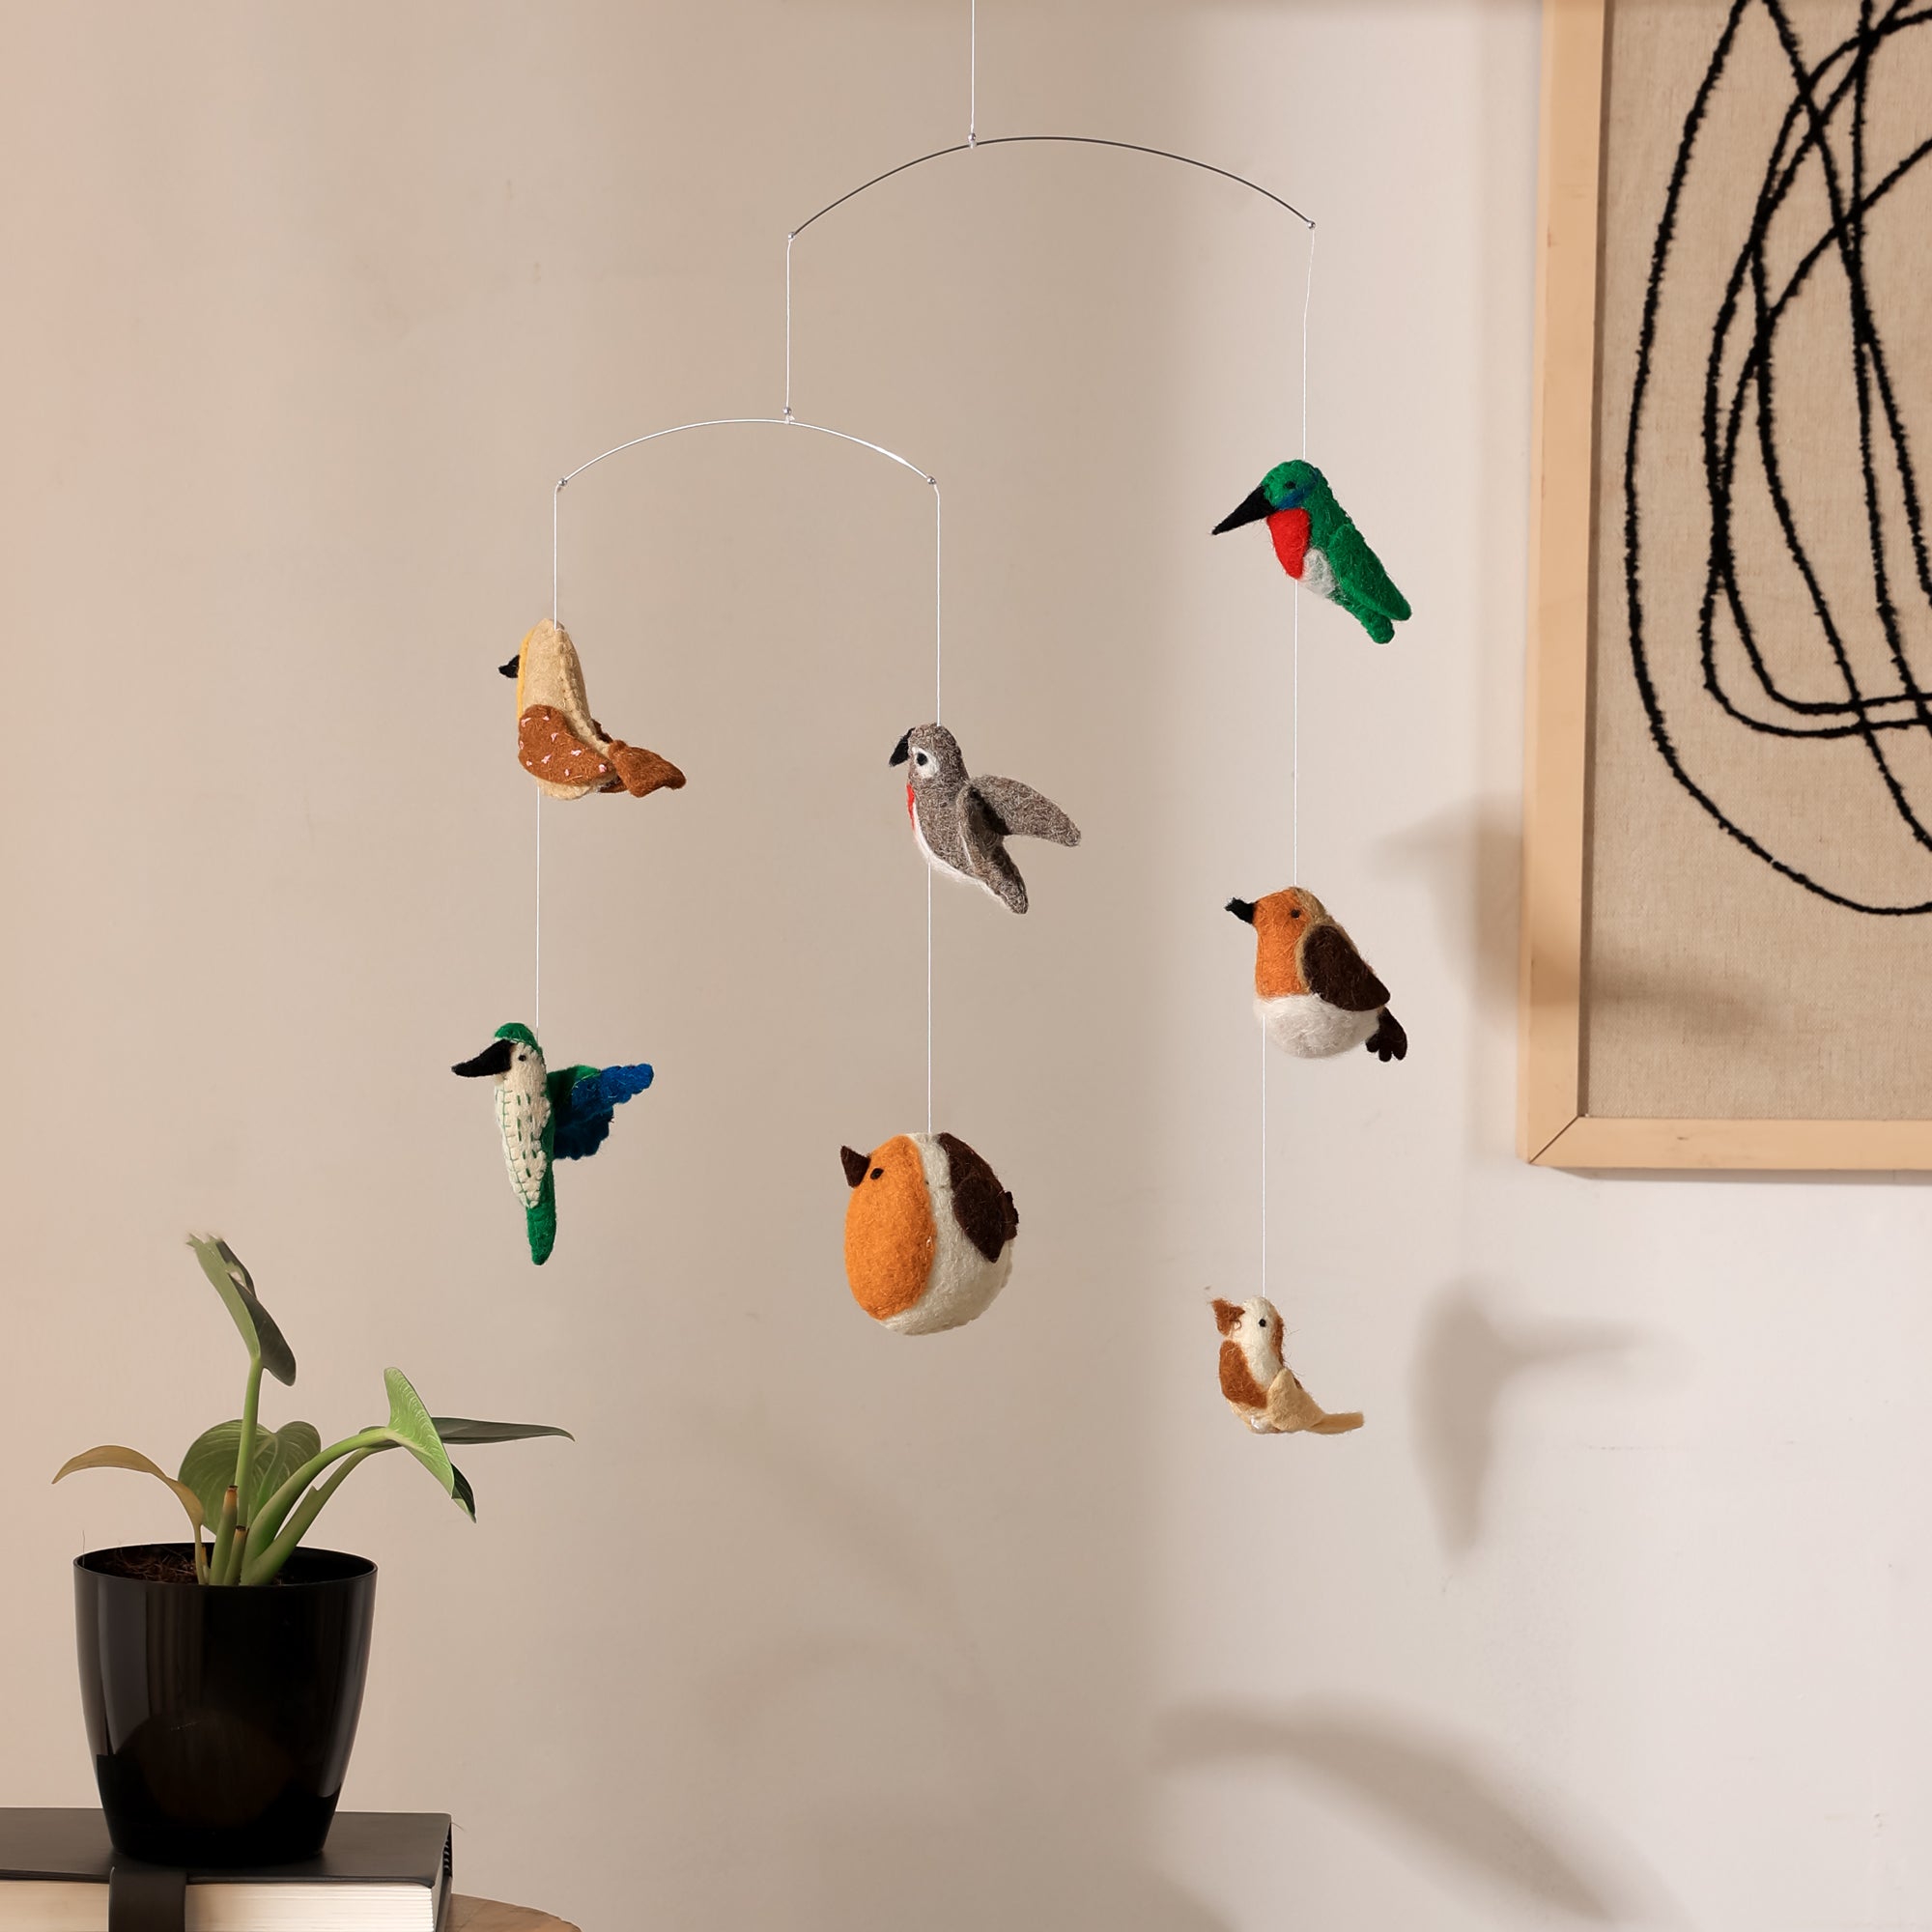 Felt Ornaments Hanging Mobile (Birds) - Kids Decor, Ornaments, Hanging Mobiles made from Wool